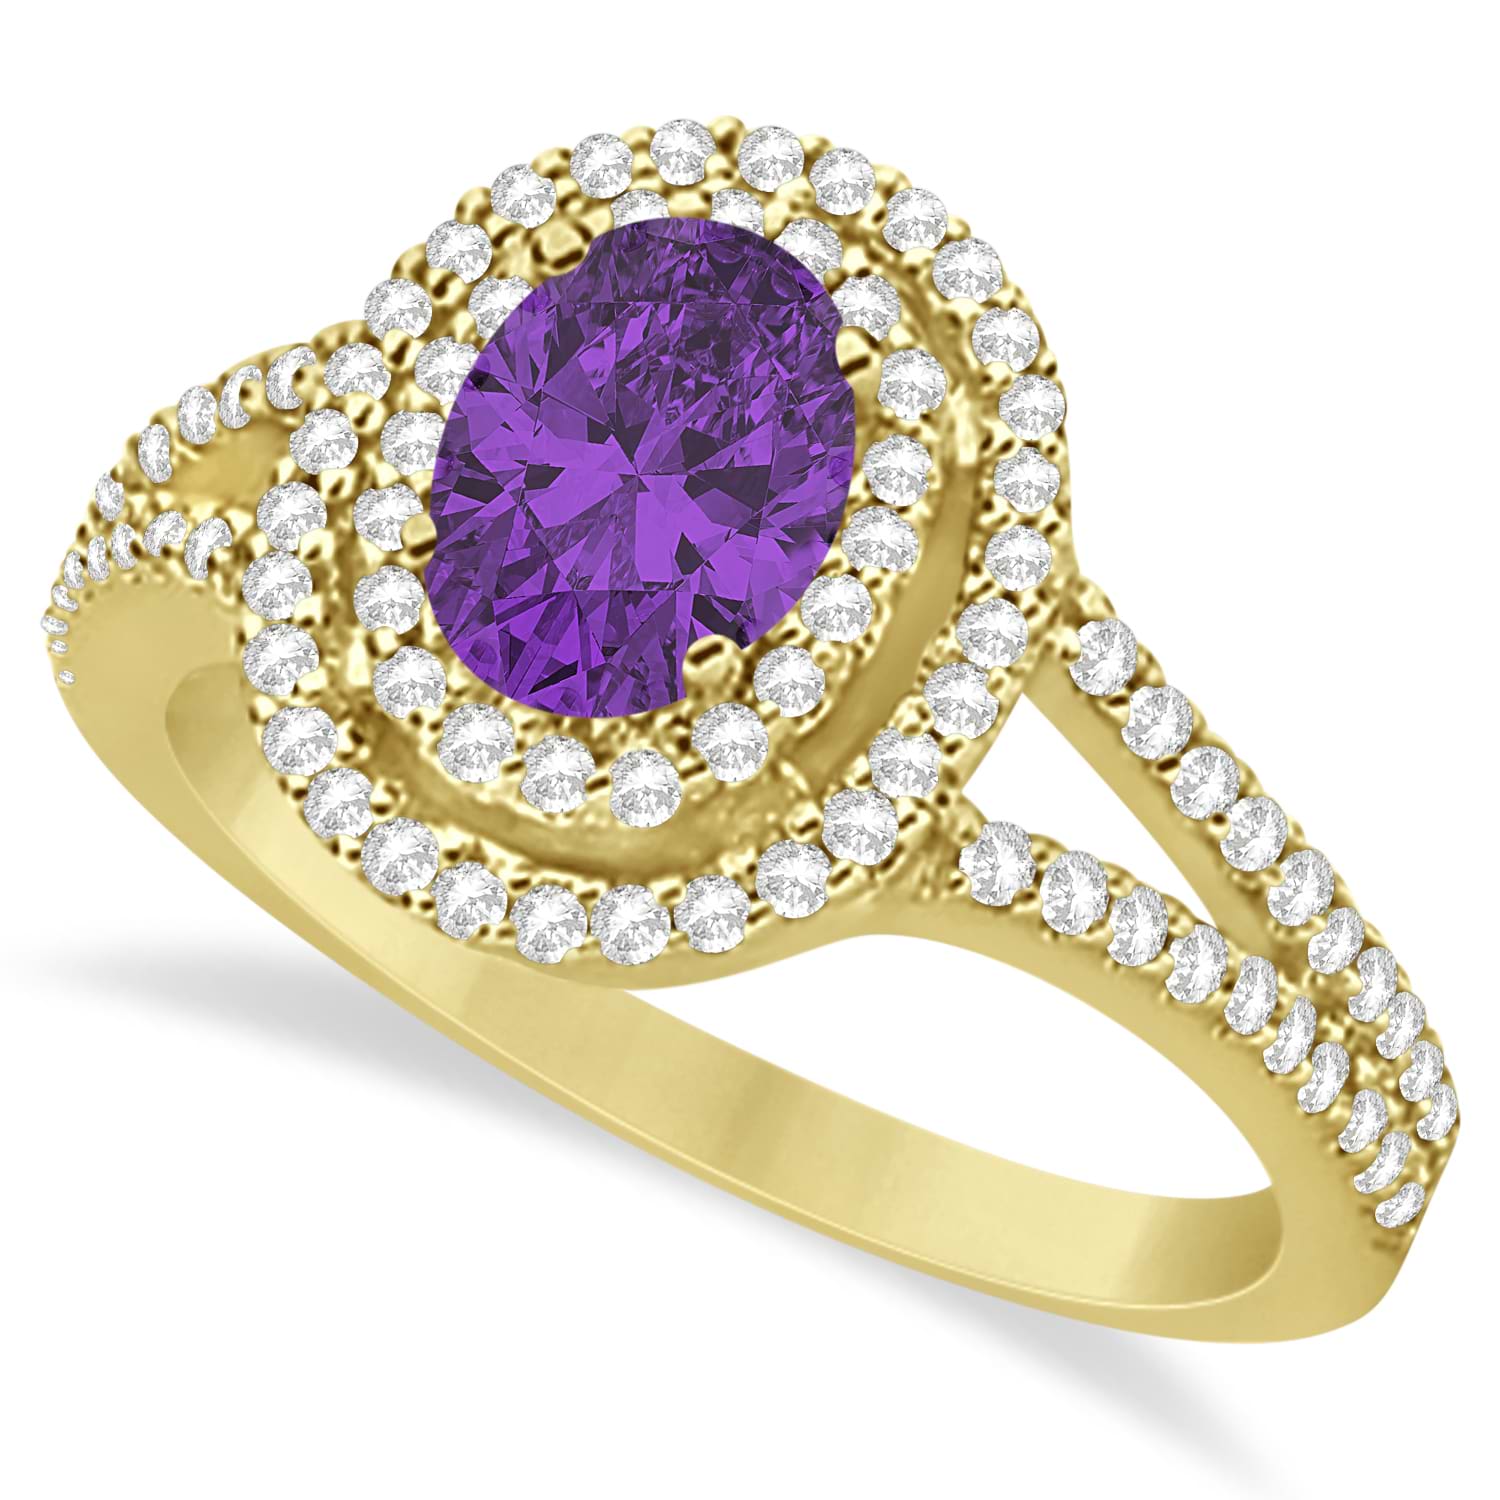 Double Halo Diamond & Amethyst Engagement Ring 14K Yellow Gold 1.34ctw